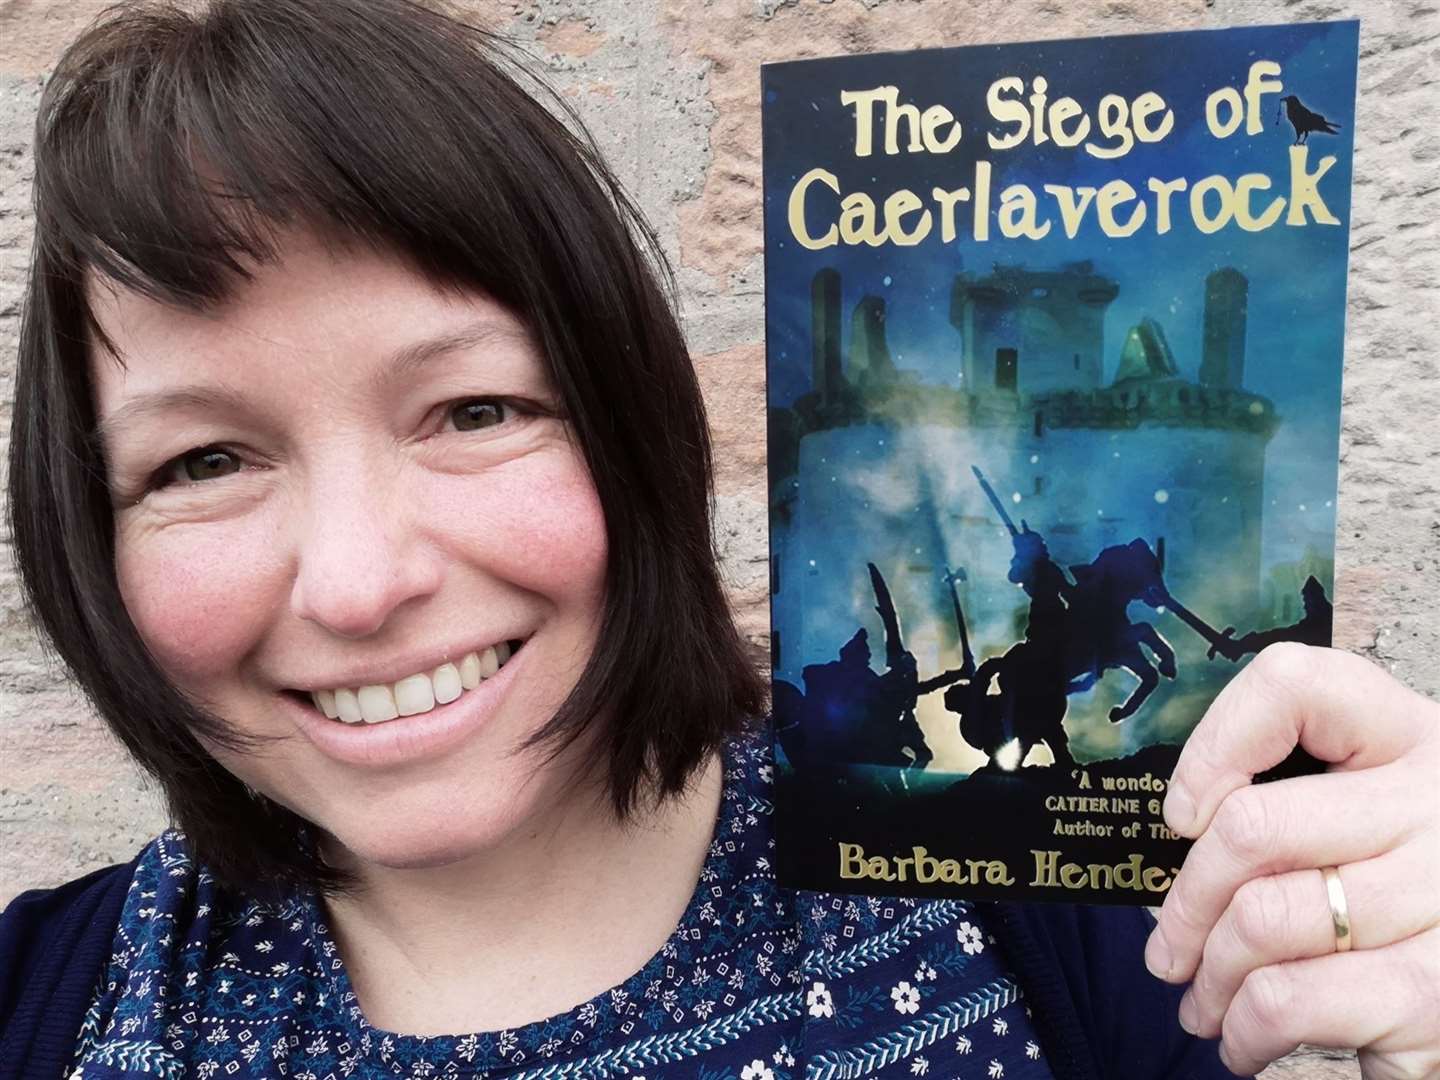 Barbara Henderson with her new book The Siege of Caerlaverock.